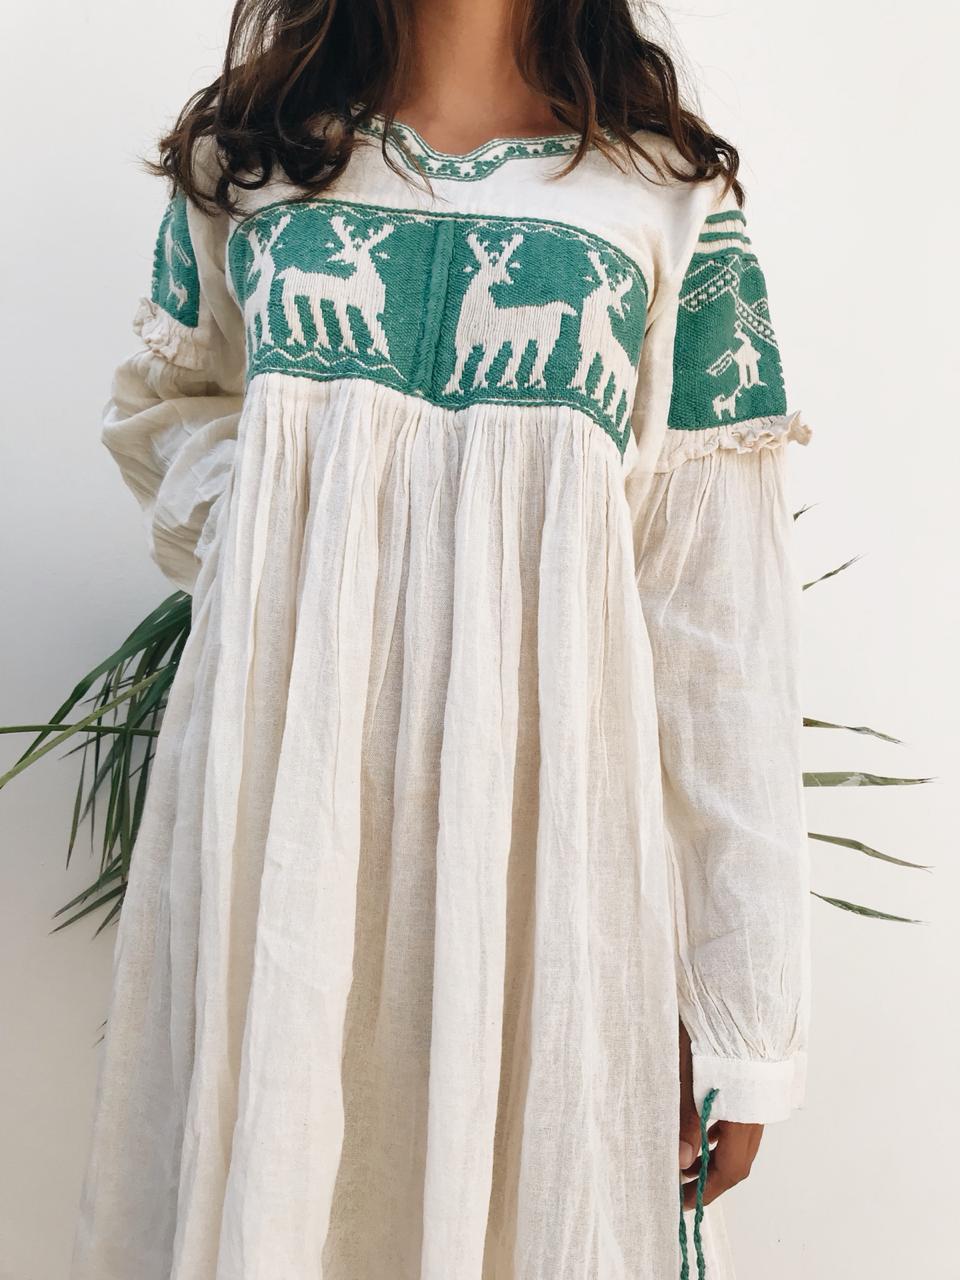 Oaxaca embroidered long sleeve dress - Wanderlustulum